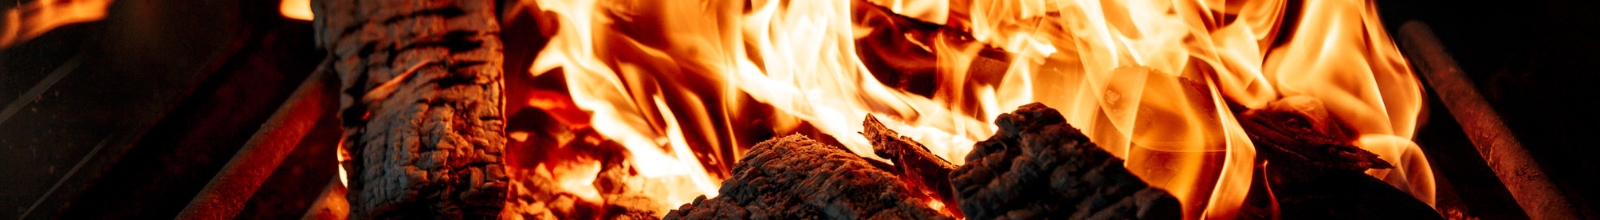 Wood logs burn in an outdoor fireplace.